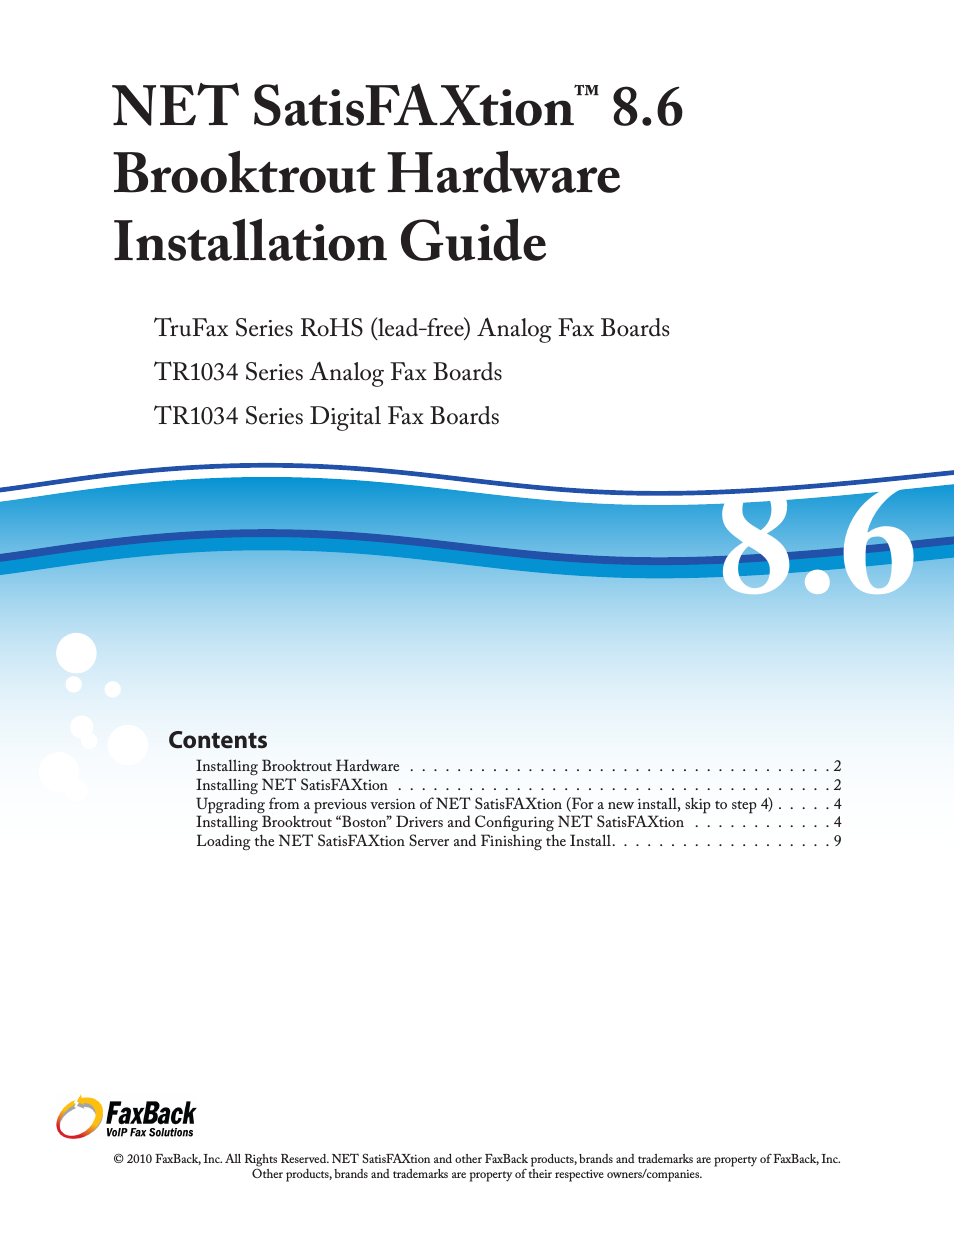 NET SatisFAXtion 8.6 - Brooktrout Hardware Installation Guide